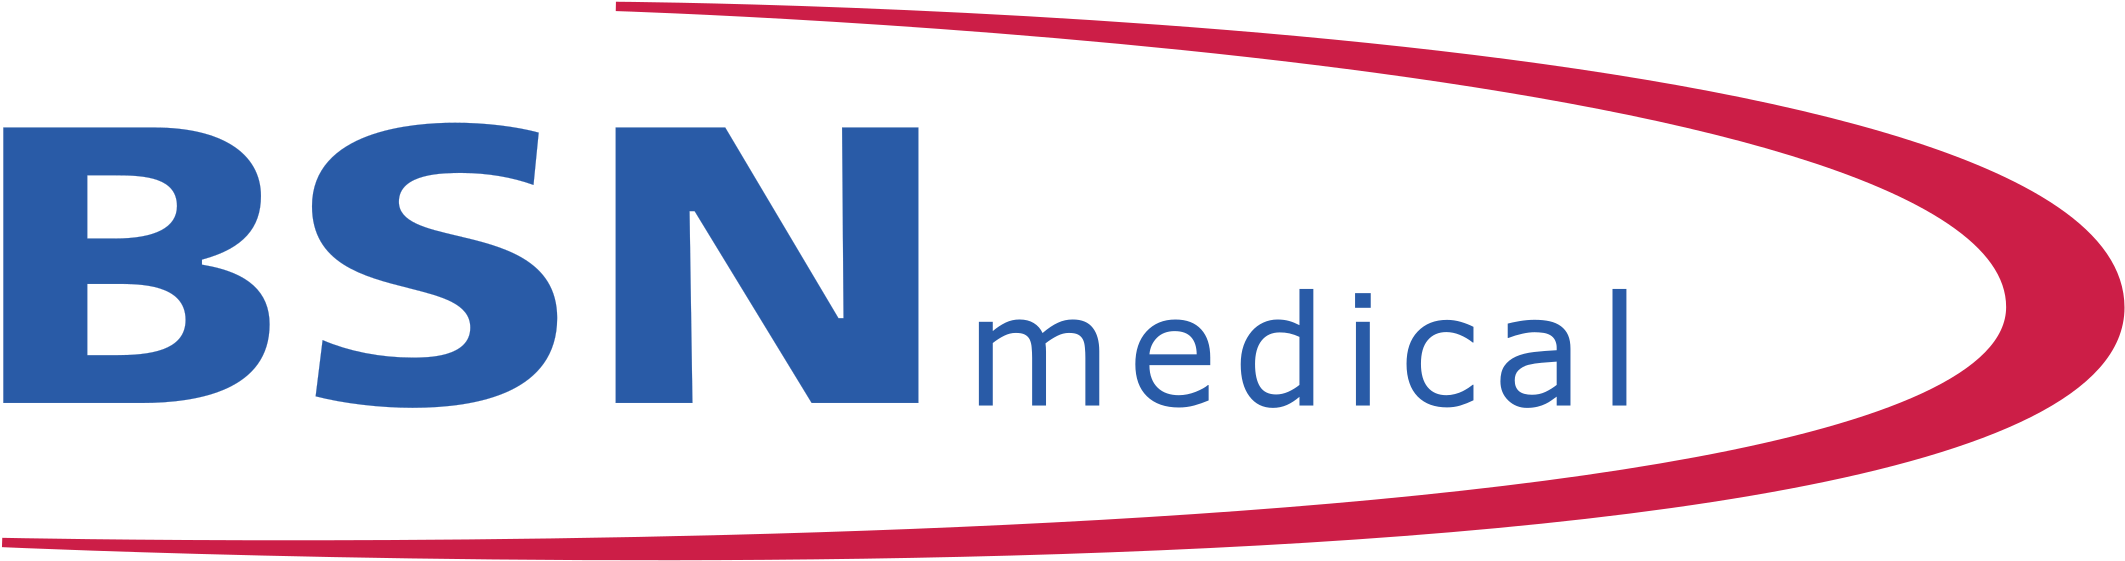 Bsn Medical Logo Logo Png Transparent - Bsn Medical 7297816 2 In X 5.4 (2400x2400)